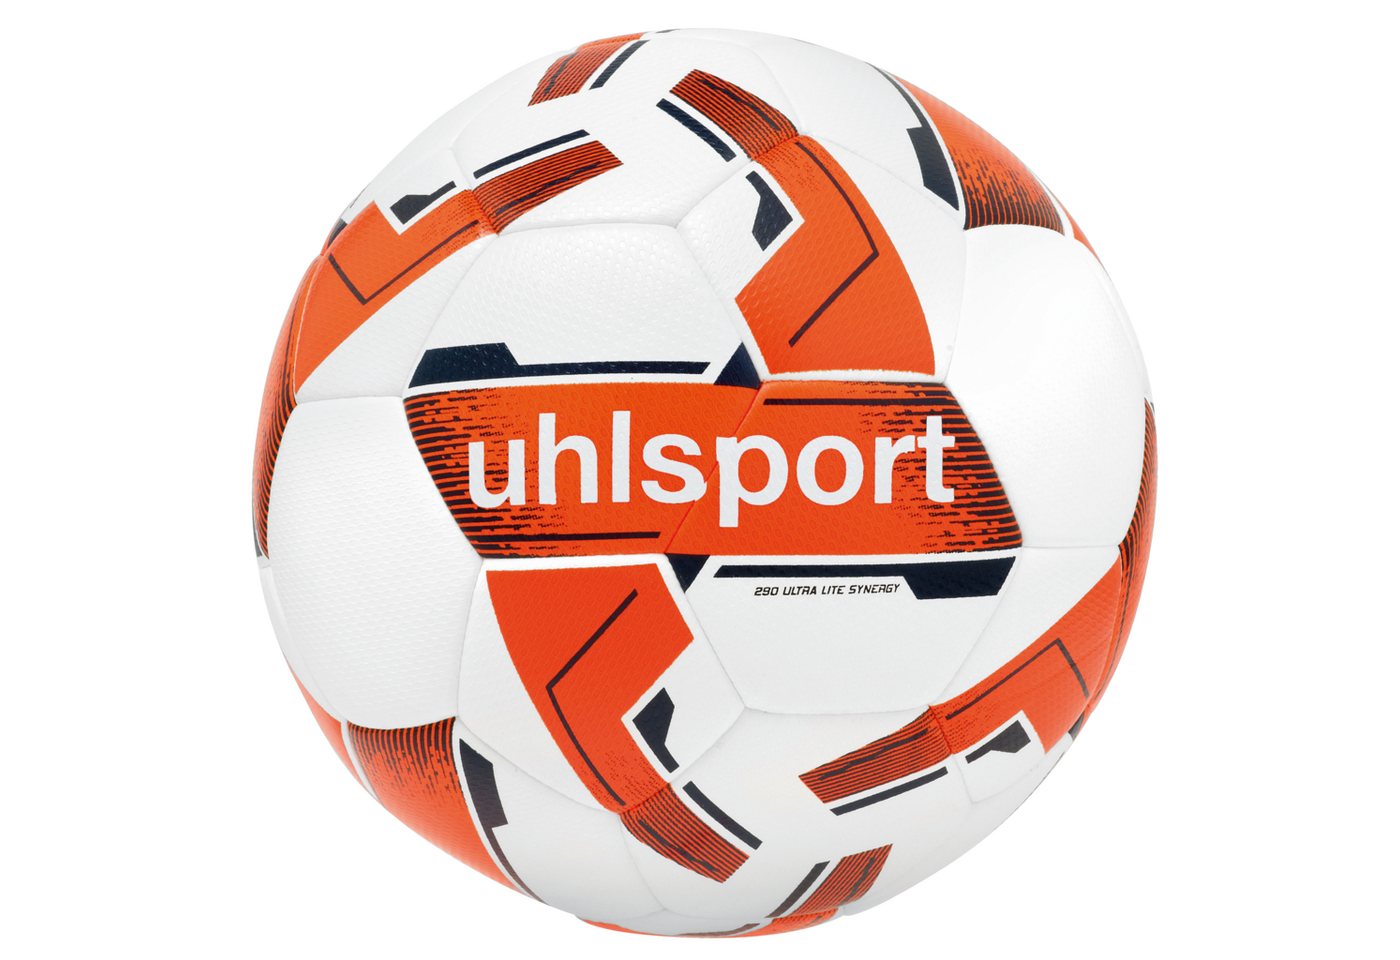 uhlsport Fußball 290 ULTRA LITE SYNERGY von uhlsport